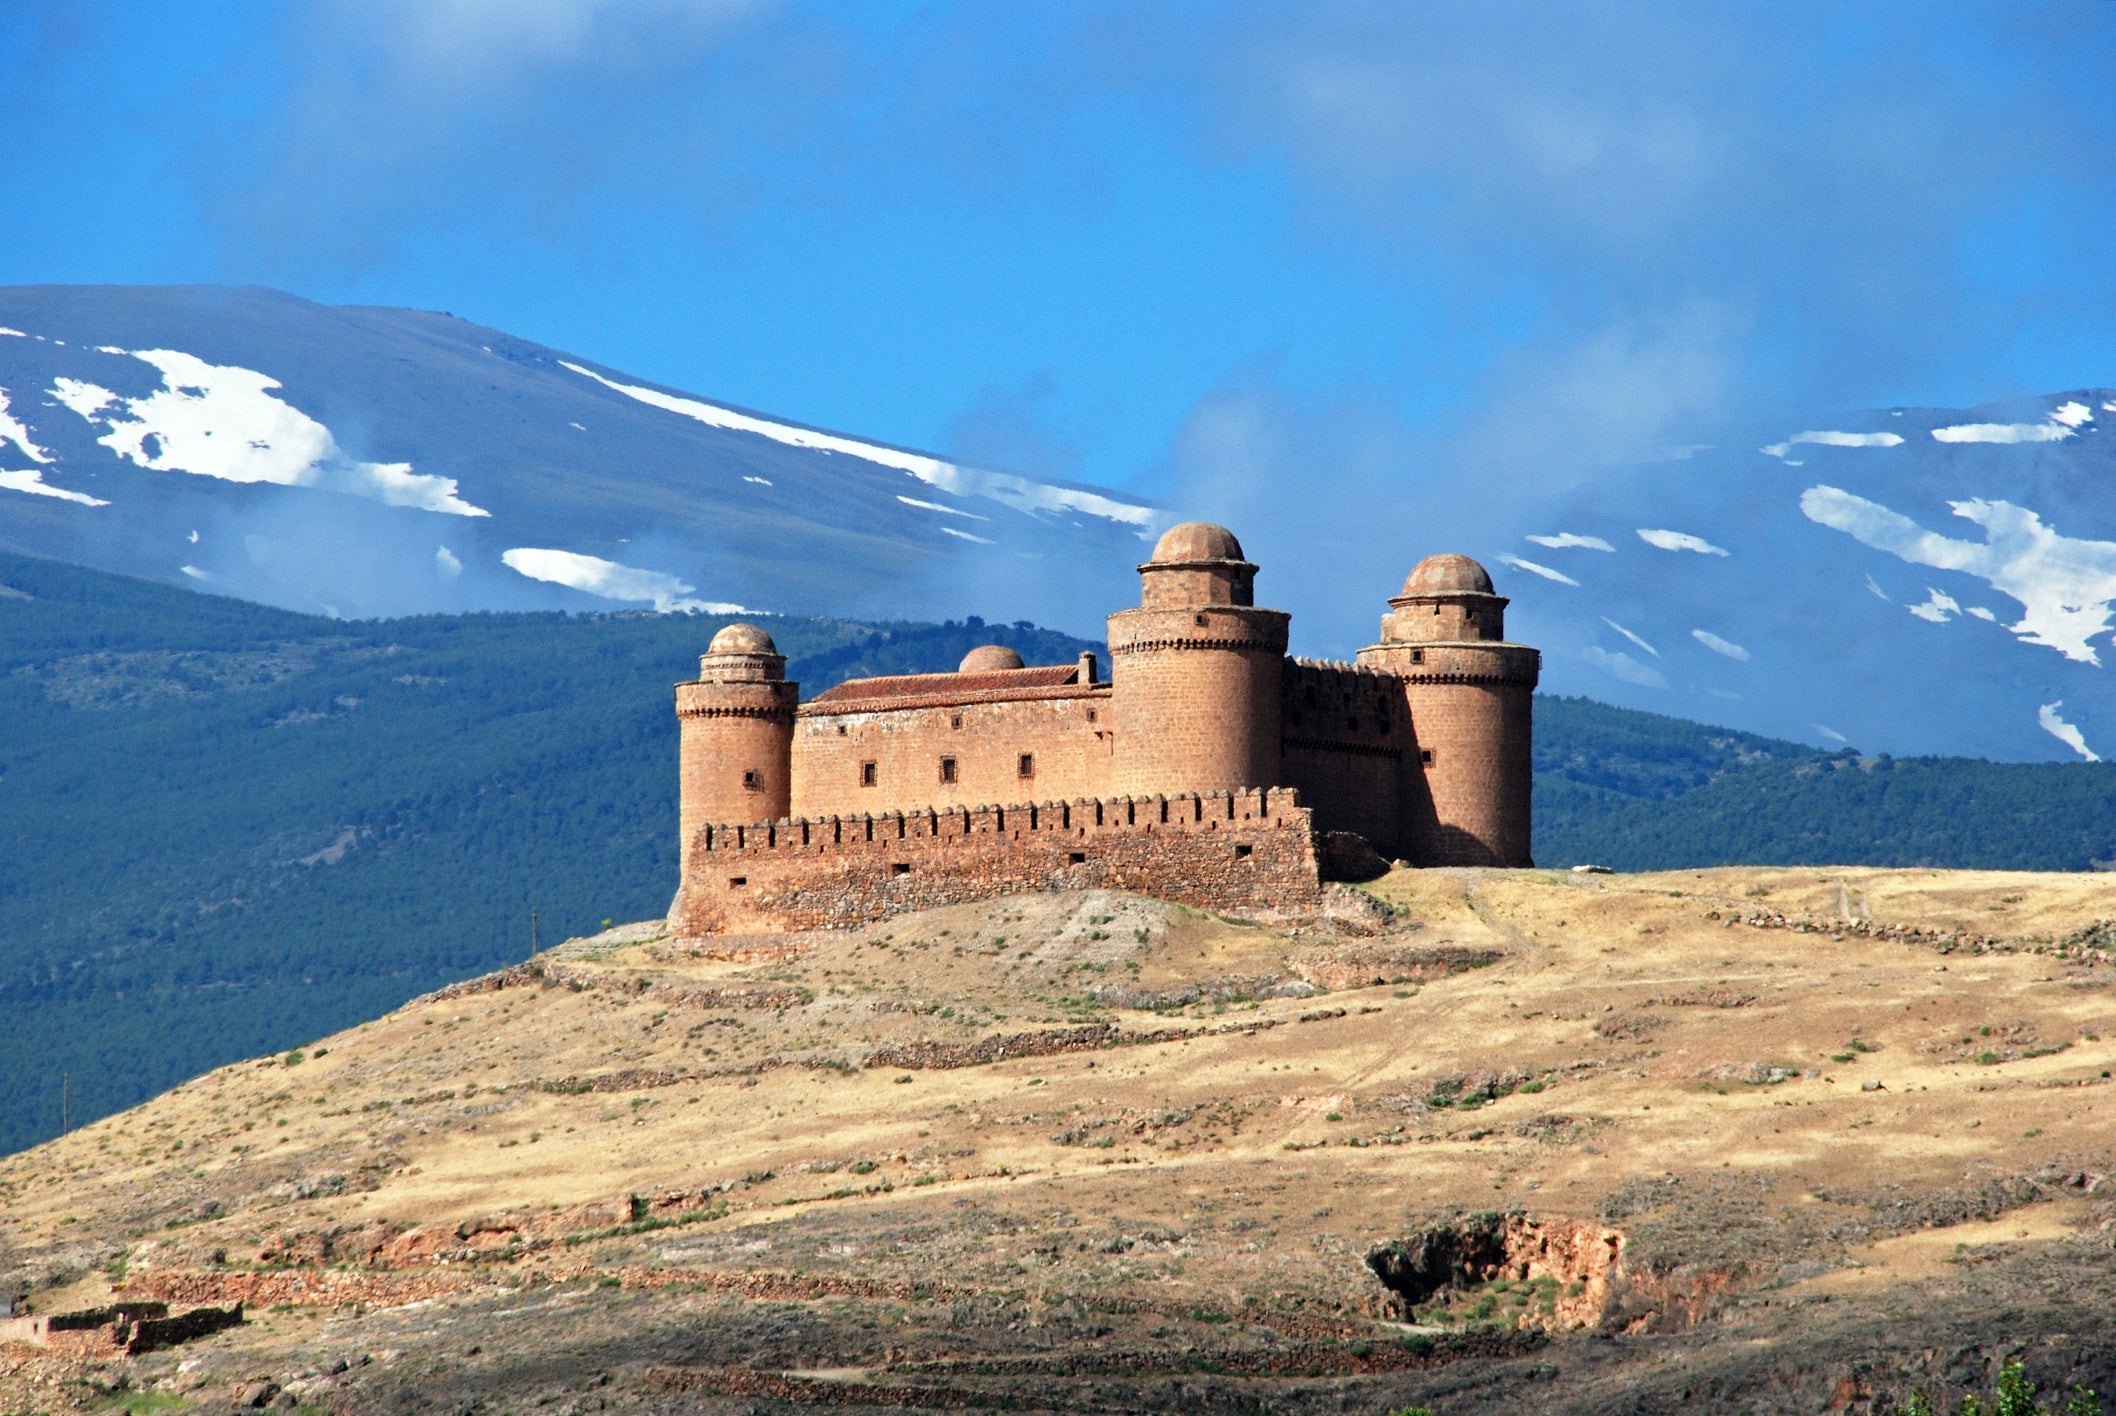 Castillo de La Calahorra is in the Sierra Nevada foothills